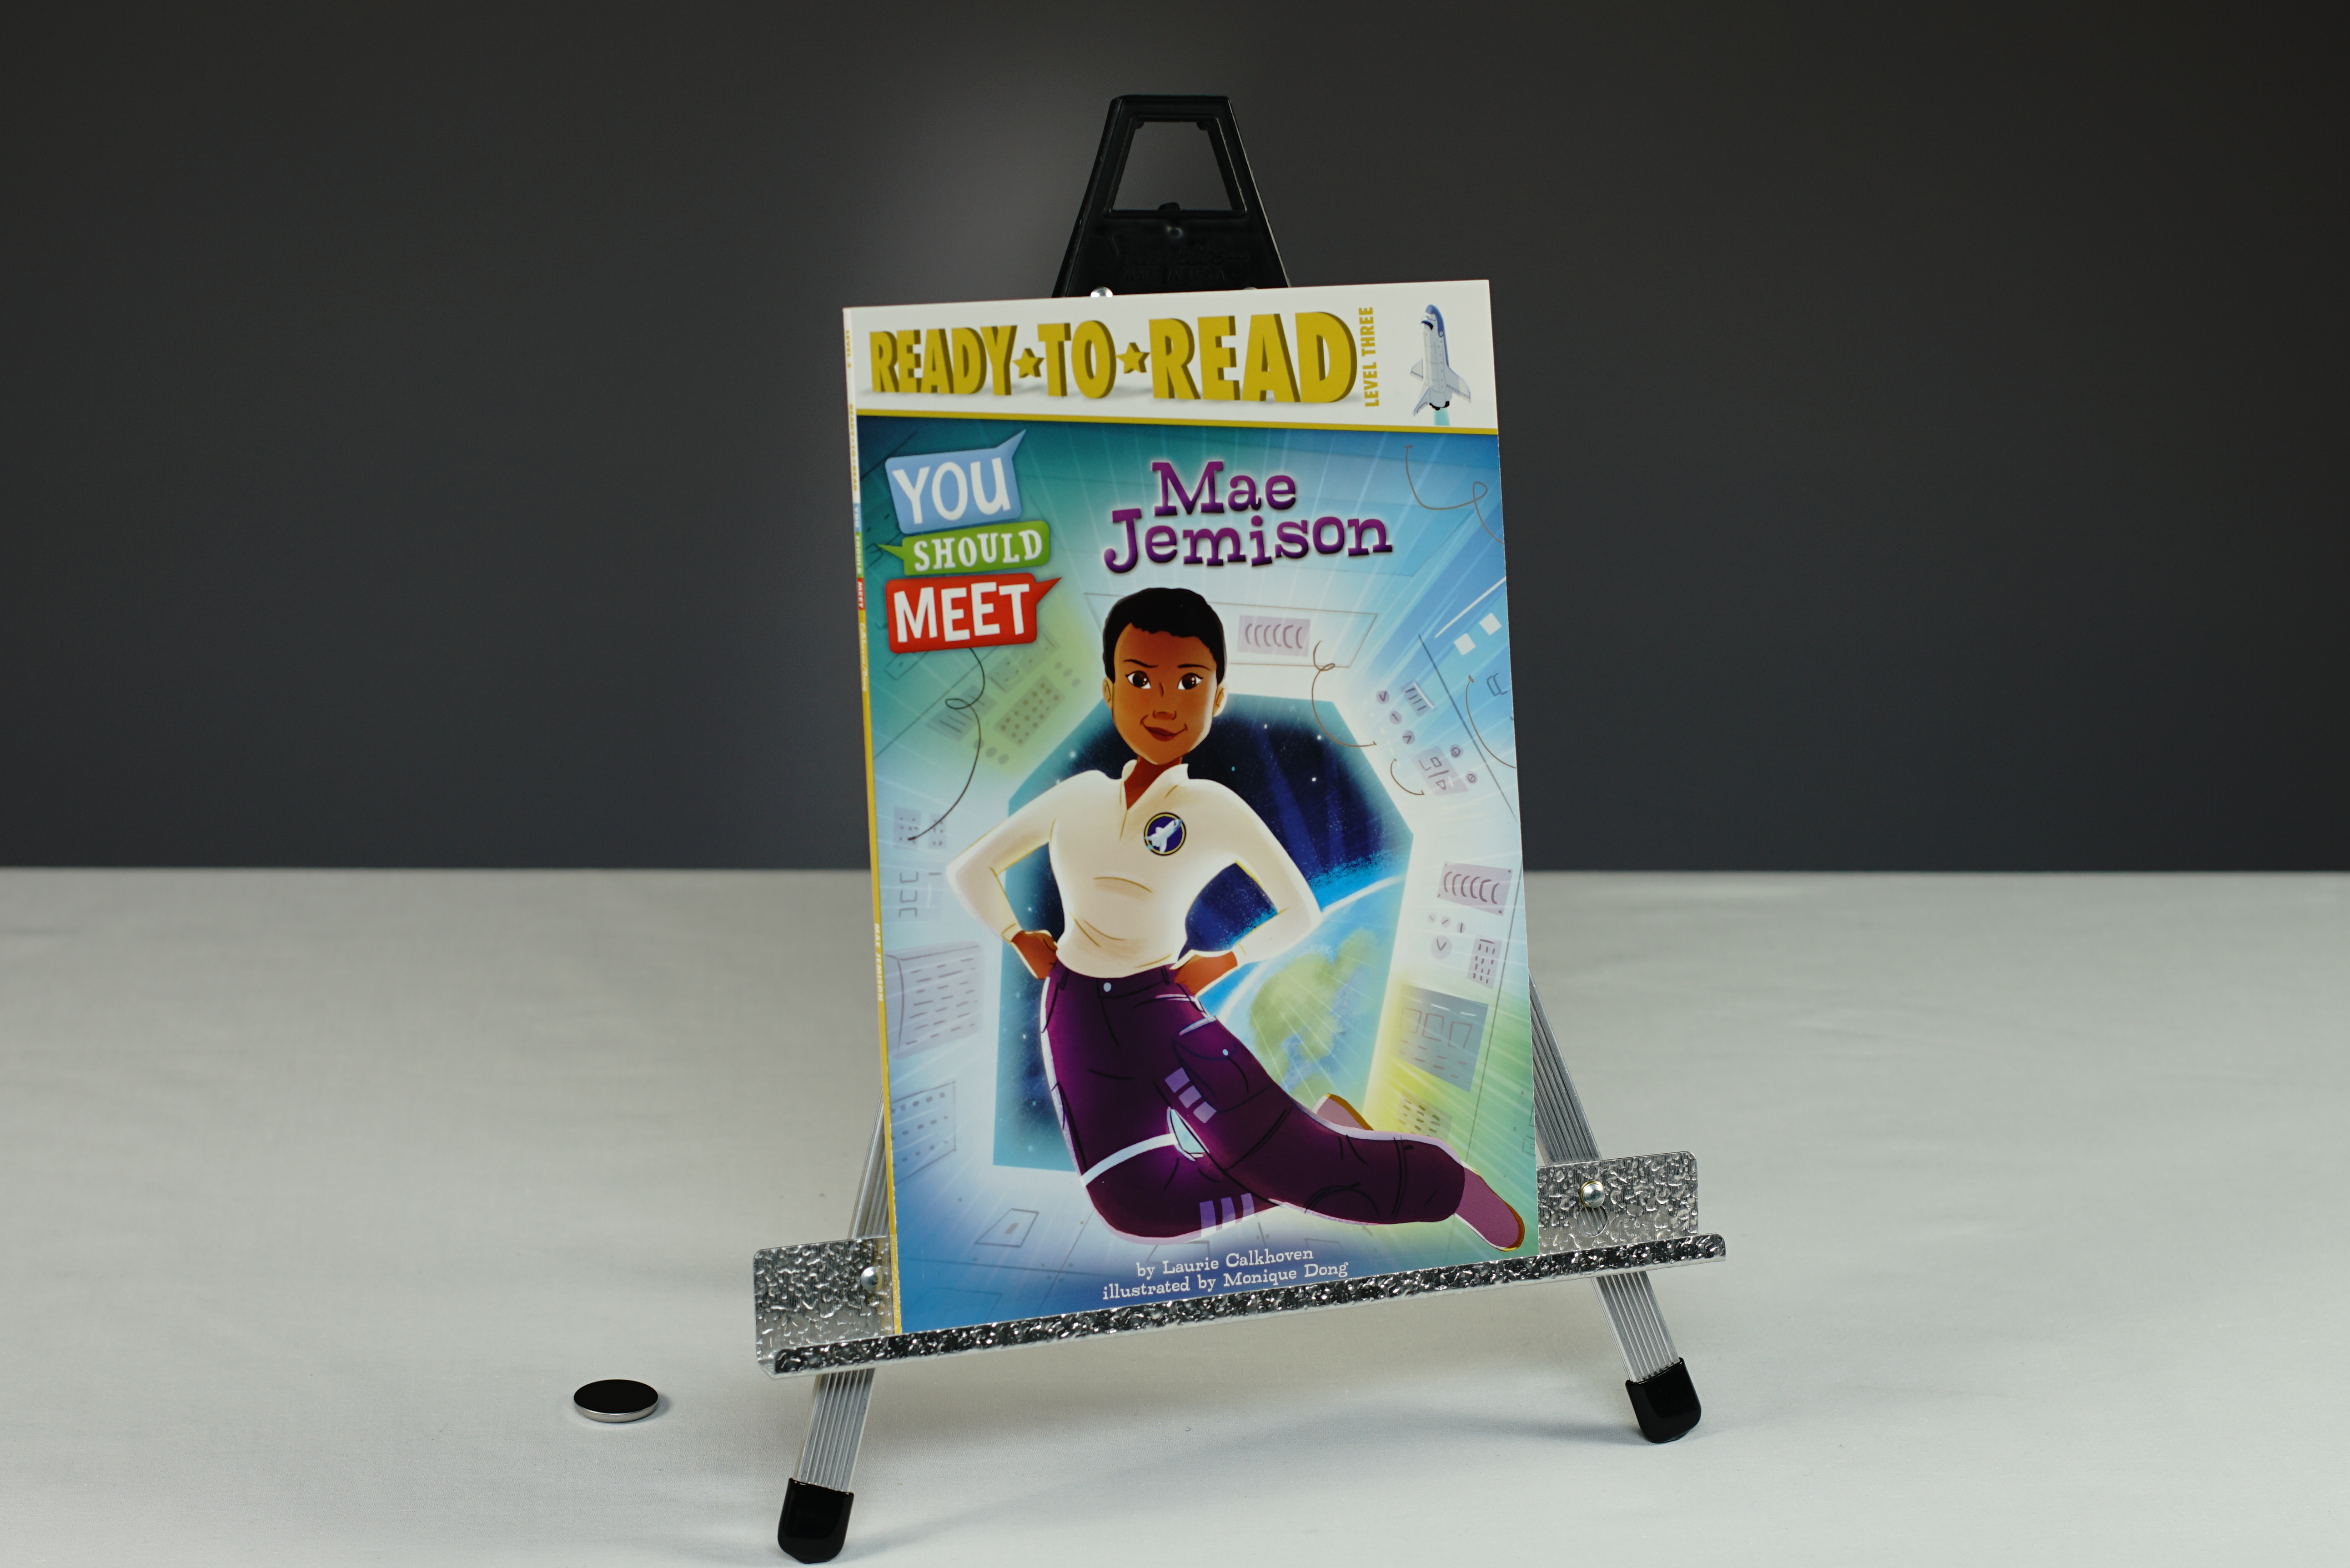 You Should Meet Mae Jemison Book